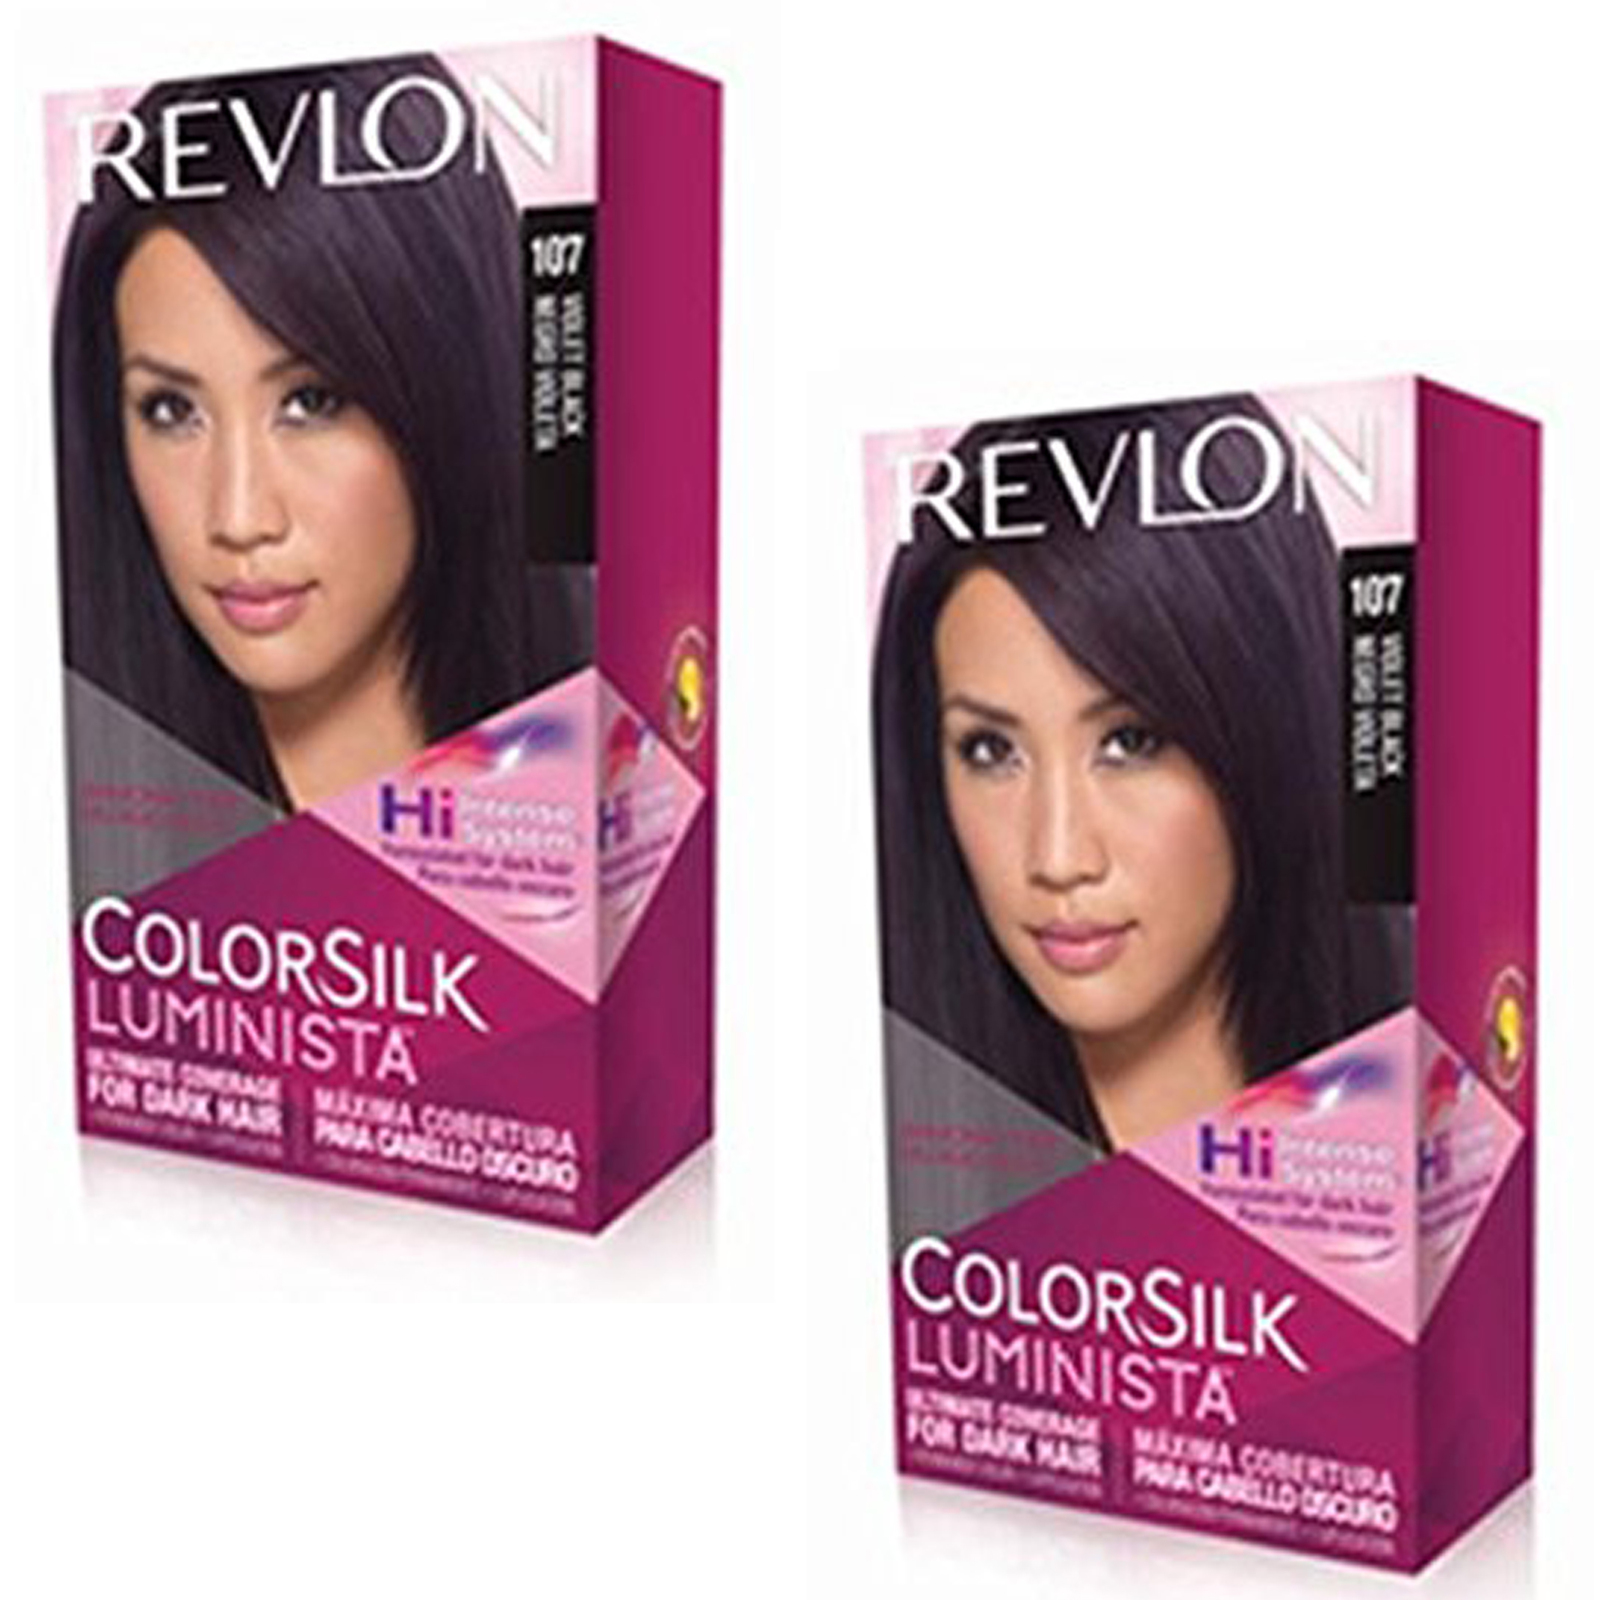 Pack of (2) New Revlon Colorsilk Luminista Haircolor, Violet Black